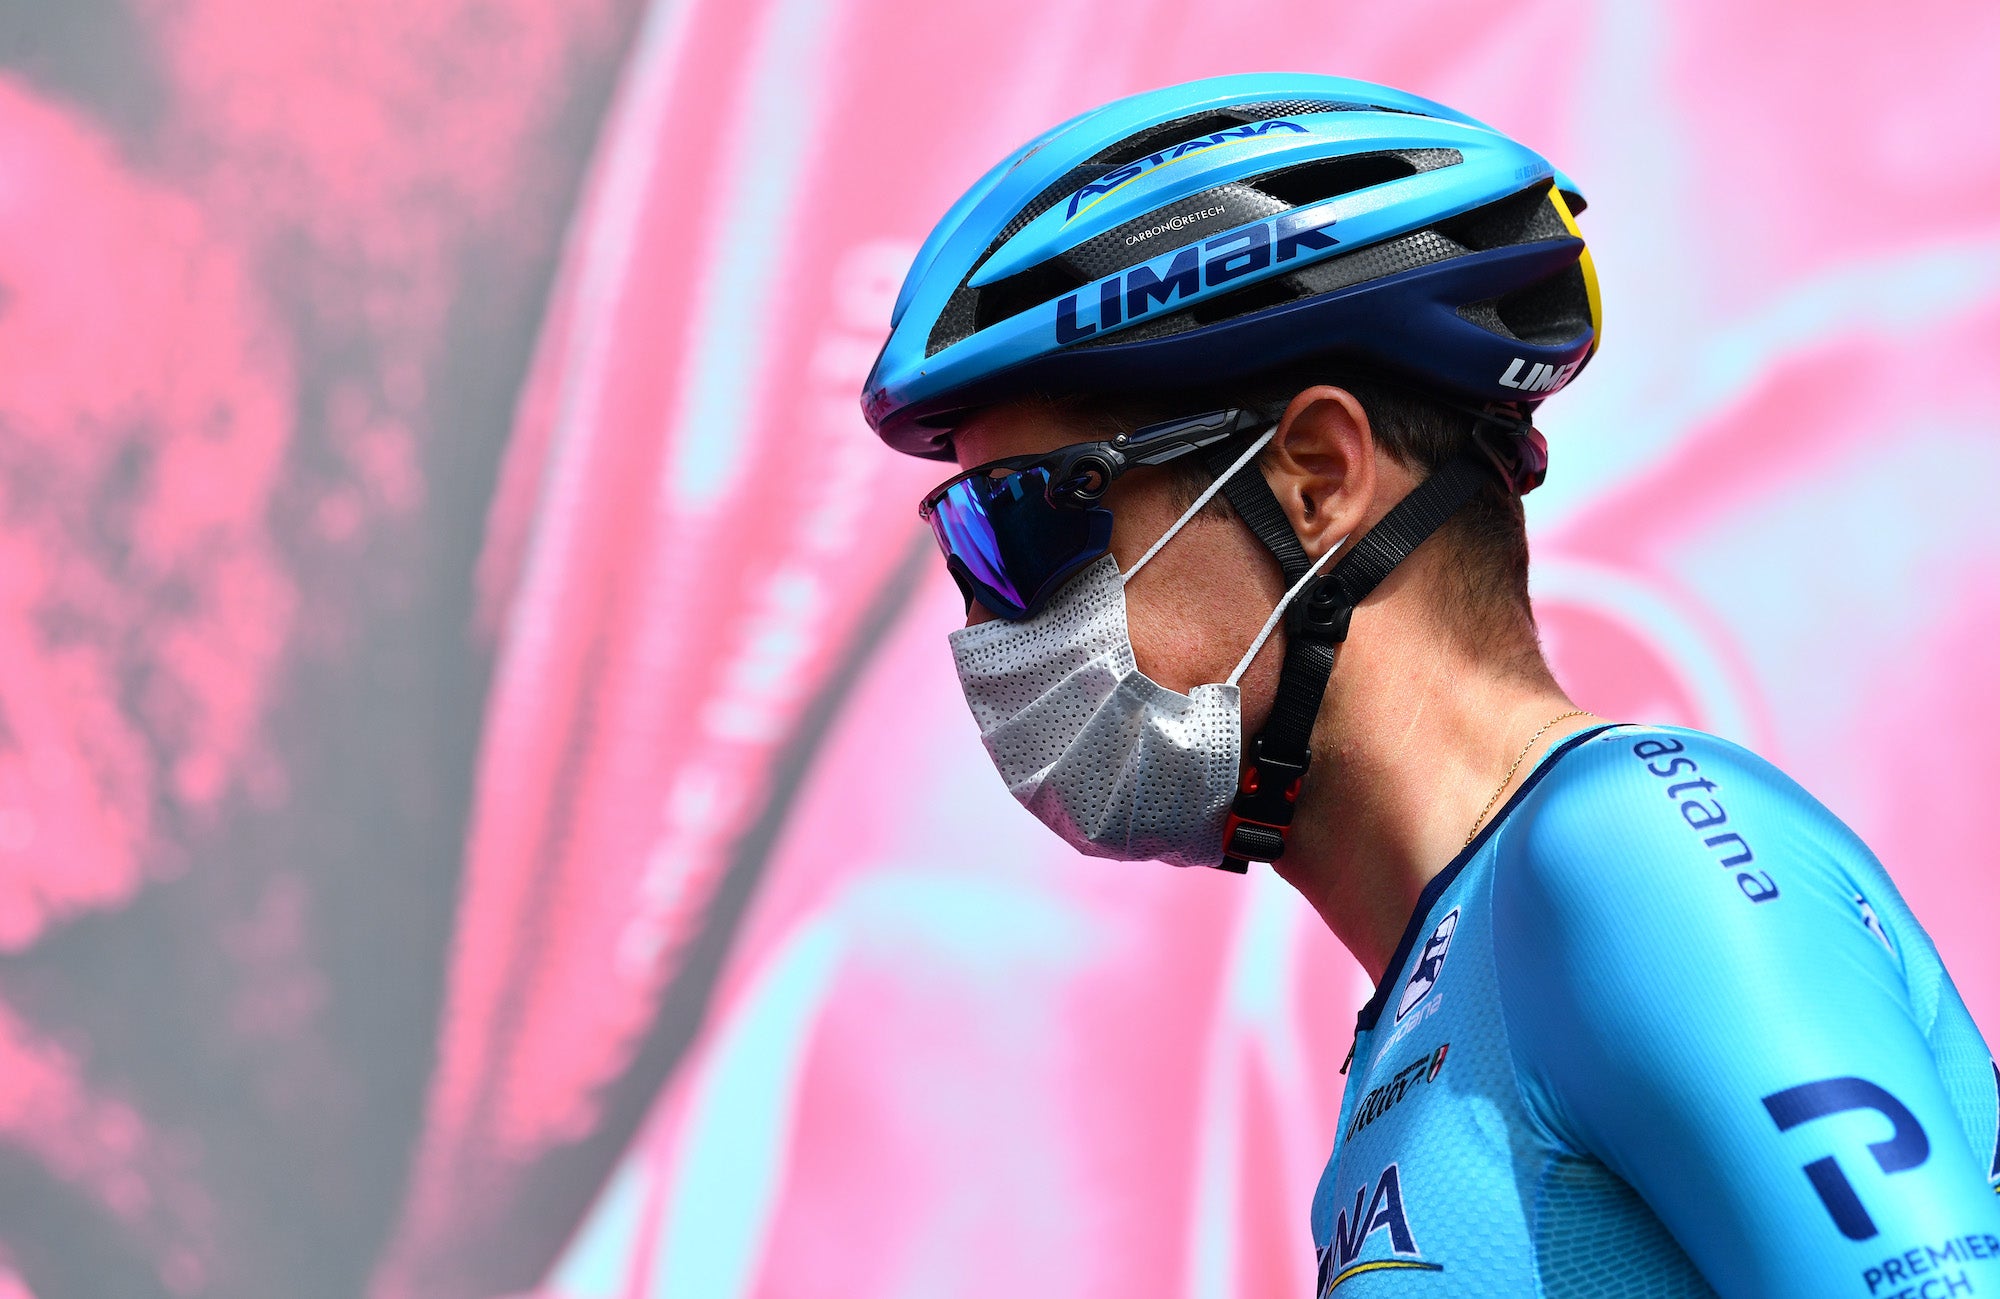 Van Vleuten to debut rainbow jersey at the Giro dell'Emilia